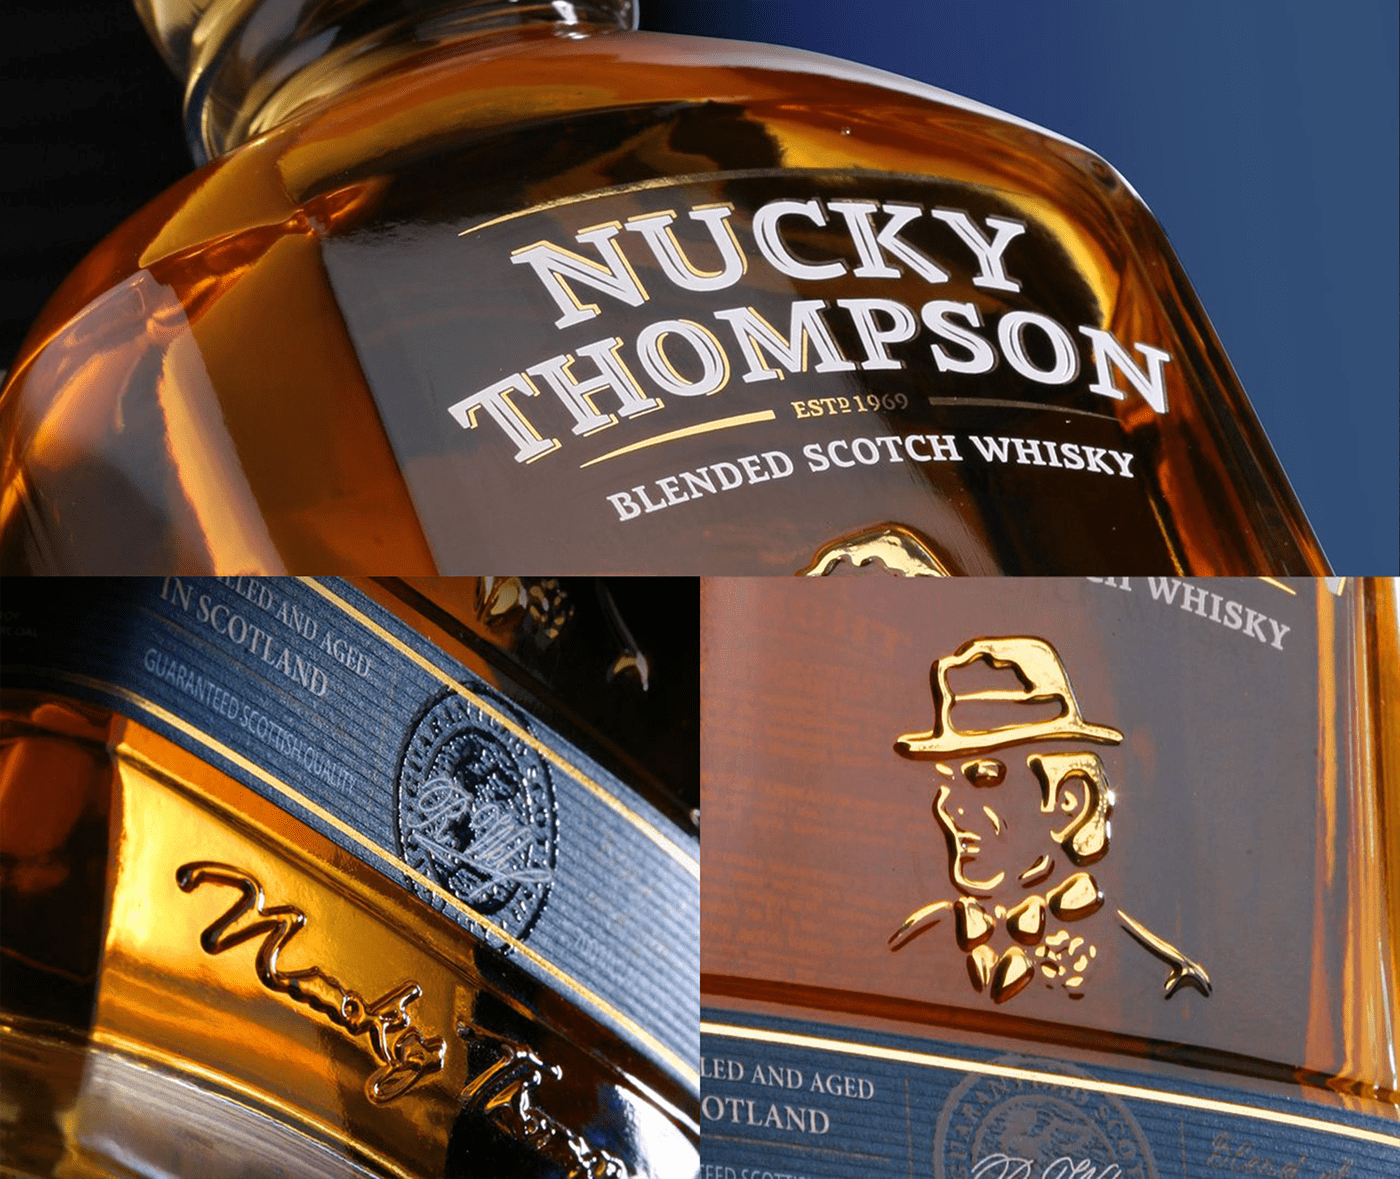 Nucky thompson 0.7 цена. Nucky Thompson виски. Nucky Thompson виски Бристоль. Nucky Thompson 6 лет. Nucky Thompson виски яблоко.